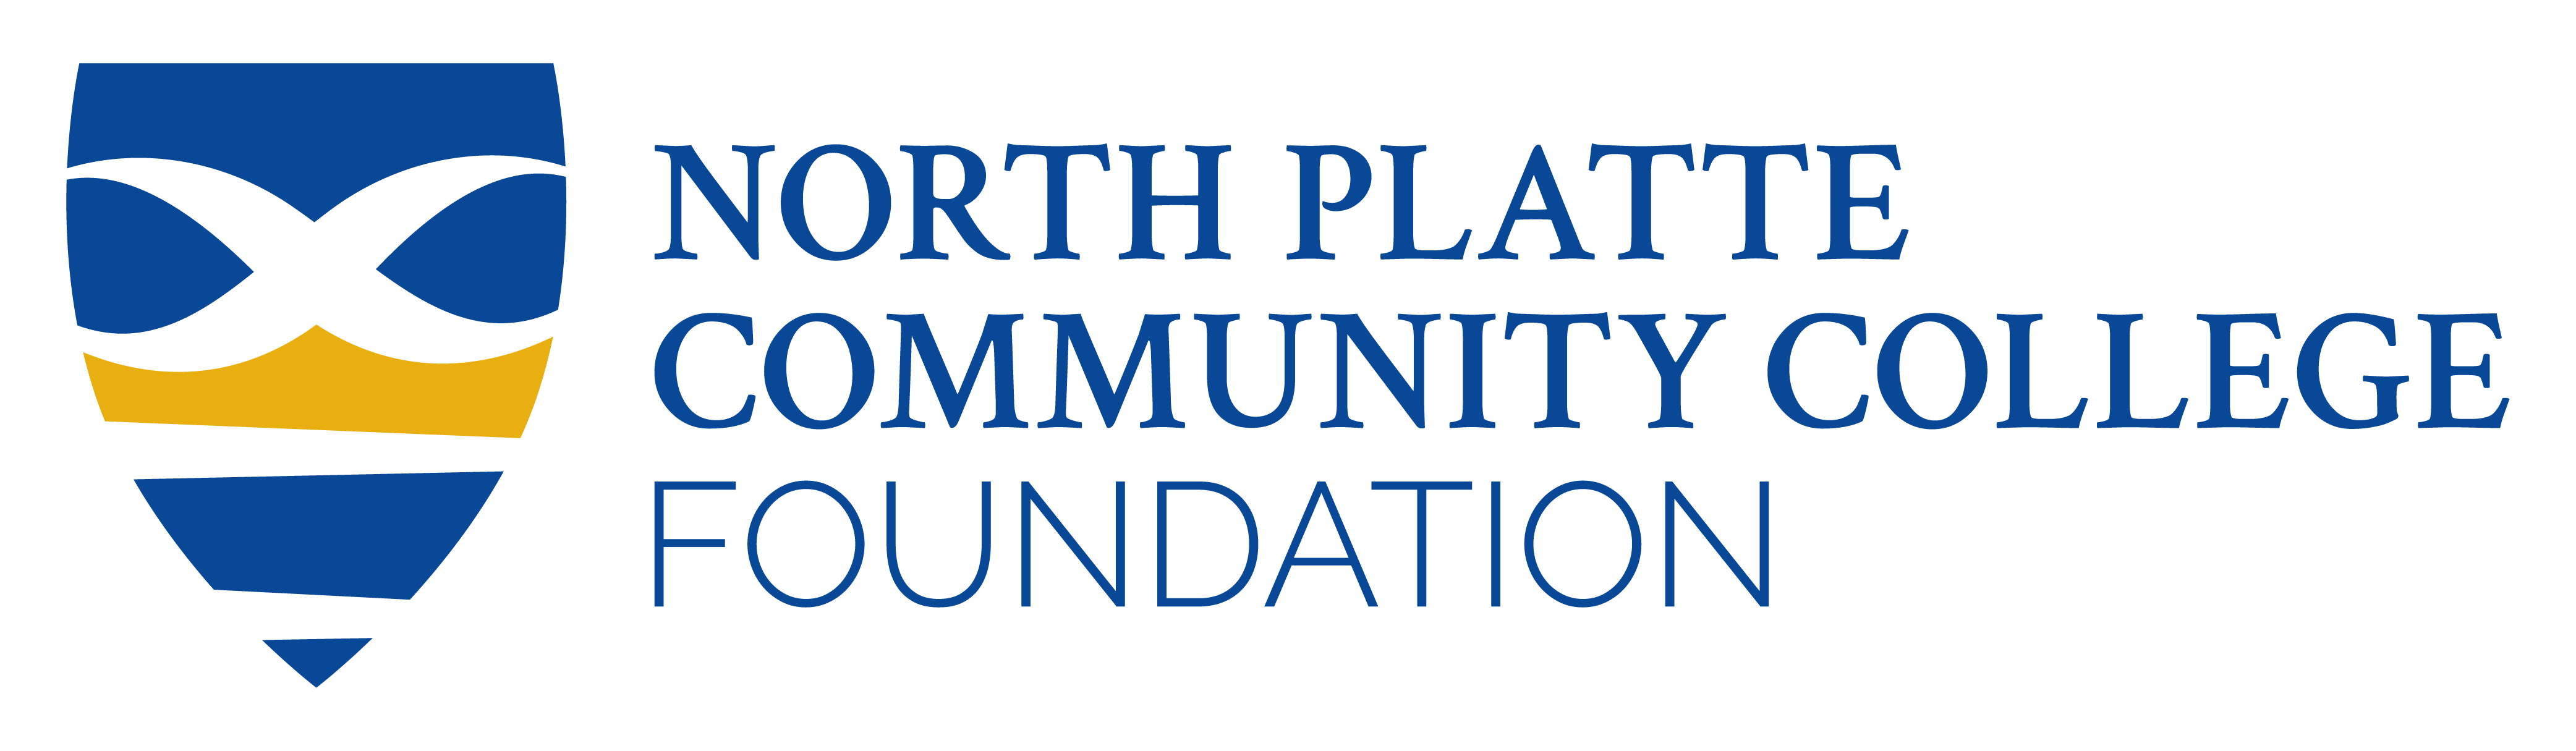 NPCC Foundation Logo